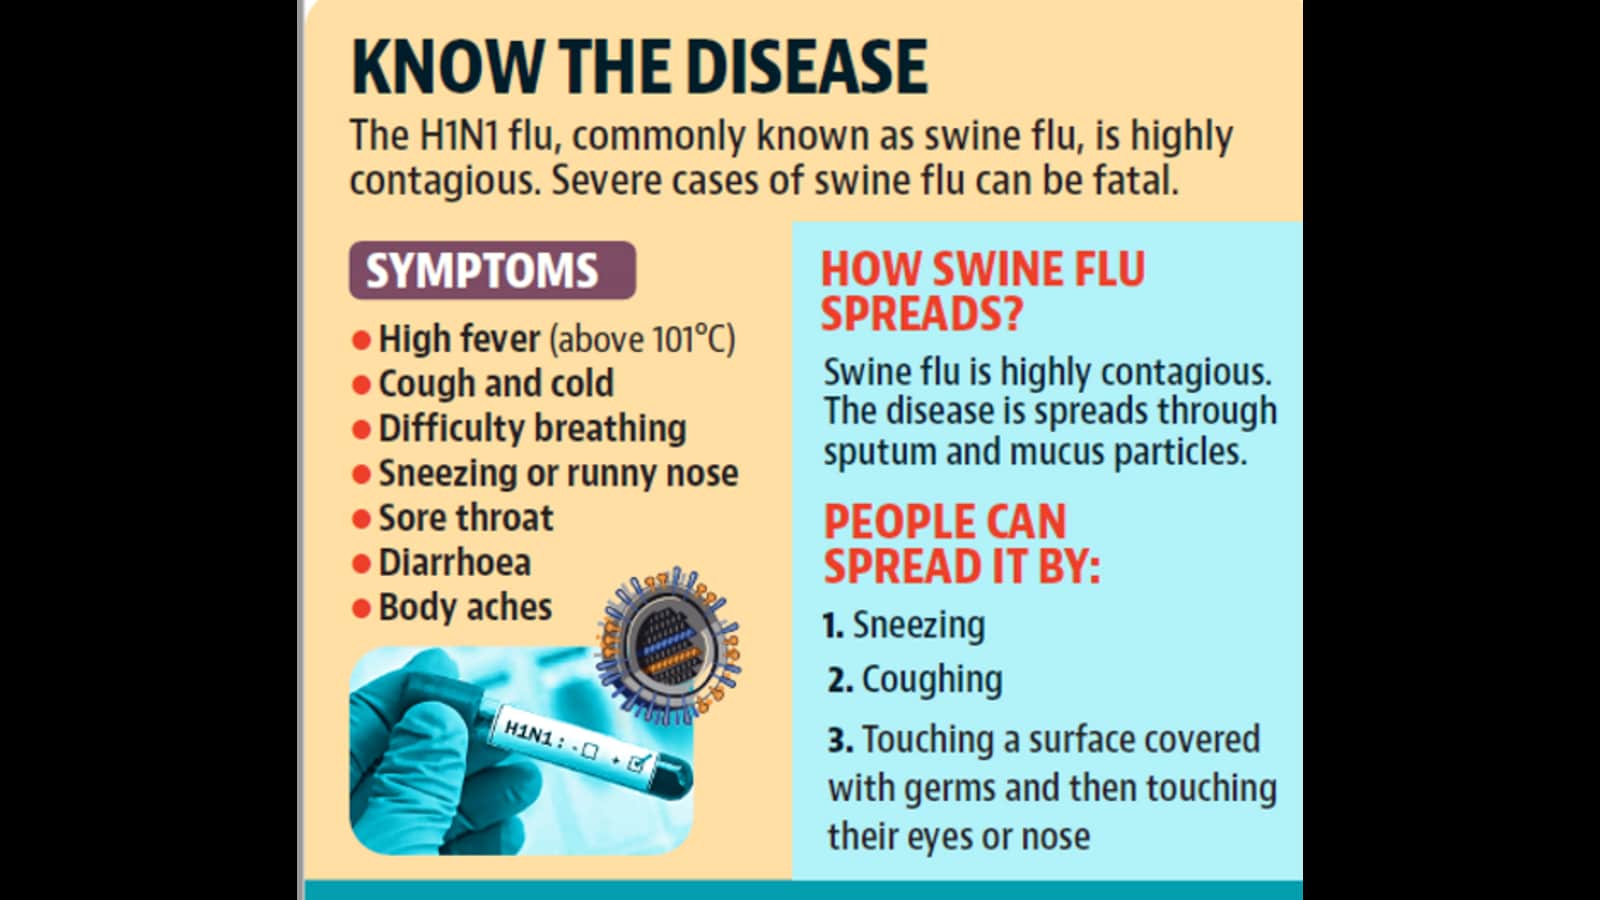 Ludhiana clocks 6 more swine flu cases, advisory issued